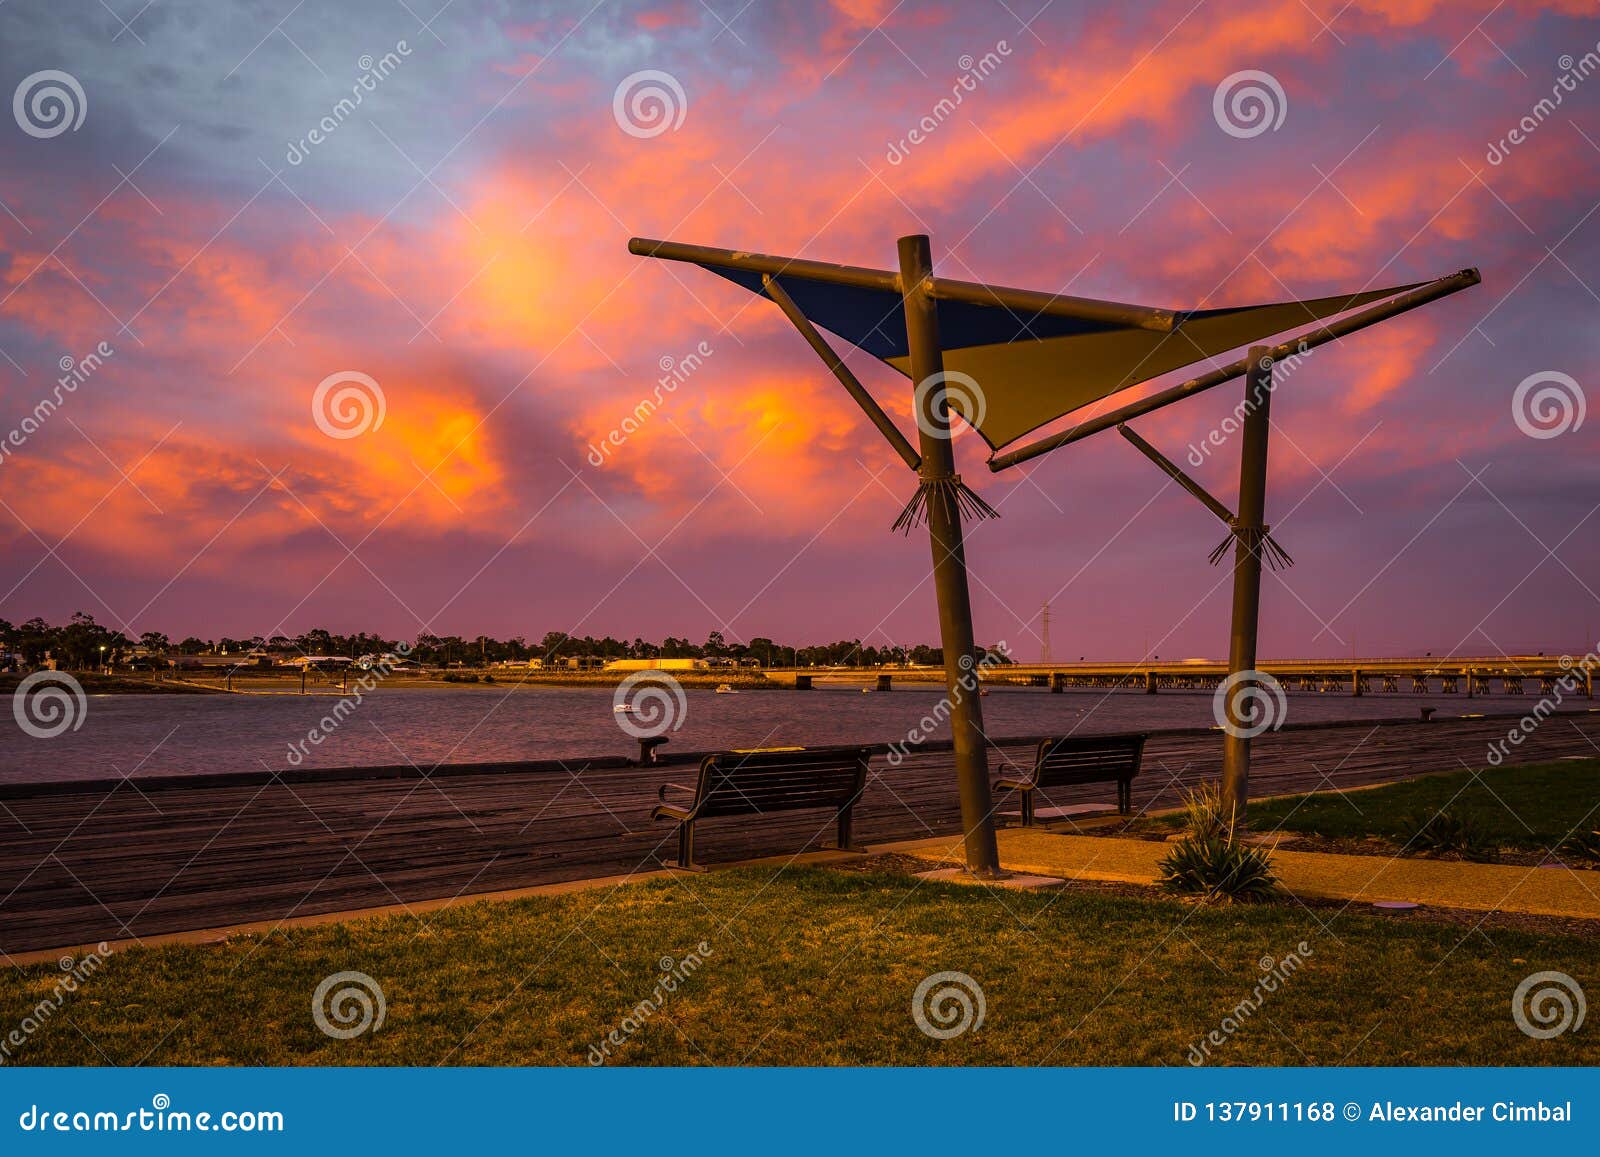 sunset in port augusta, australia